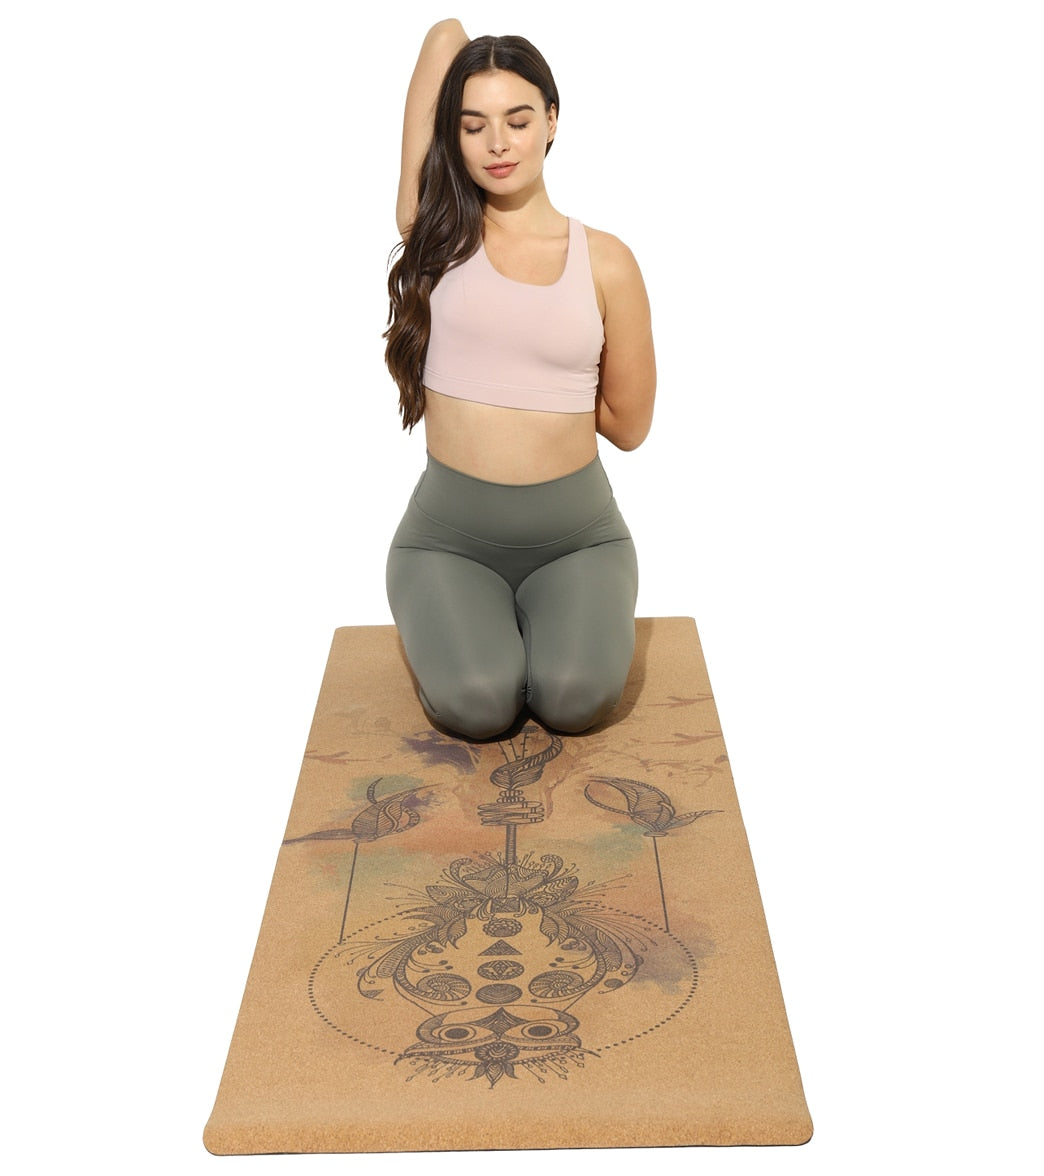 Chakra Pro Cork Yoga Mat by Shakti Warrior 100% Natural & Non